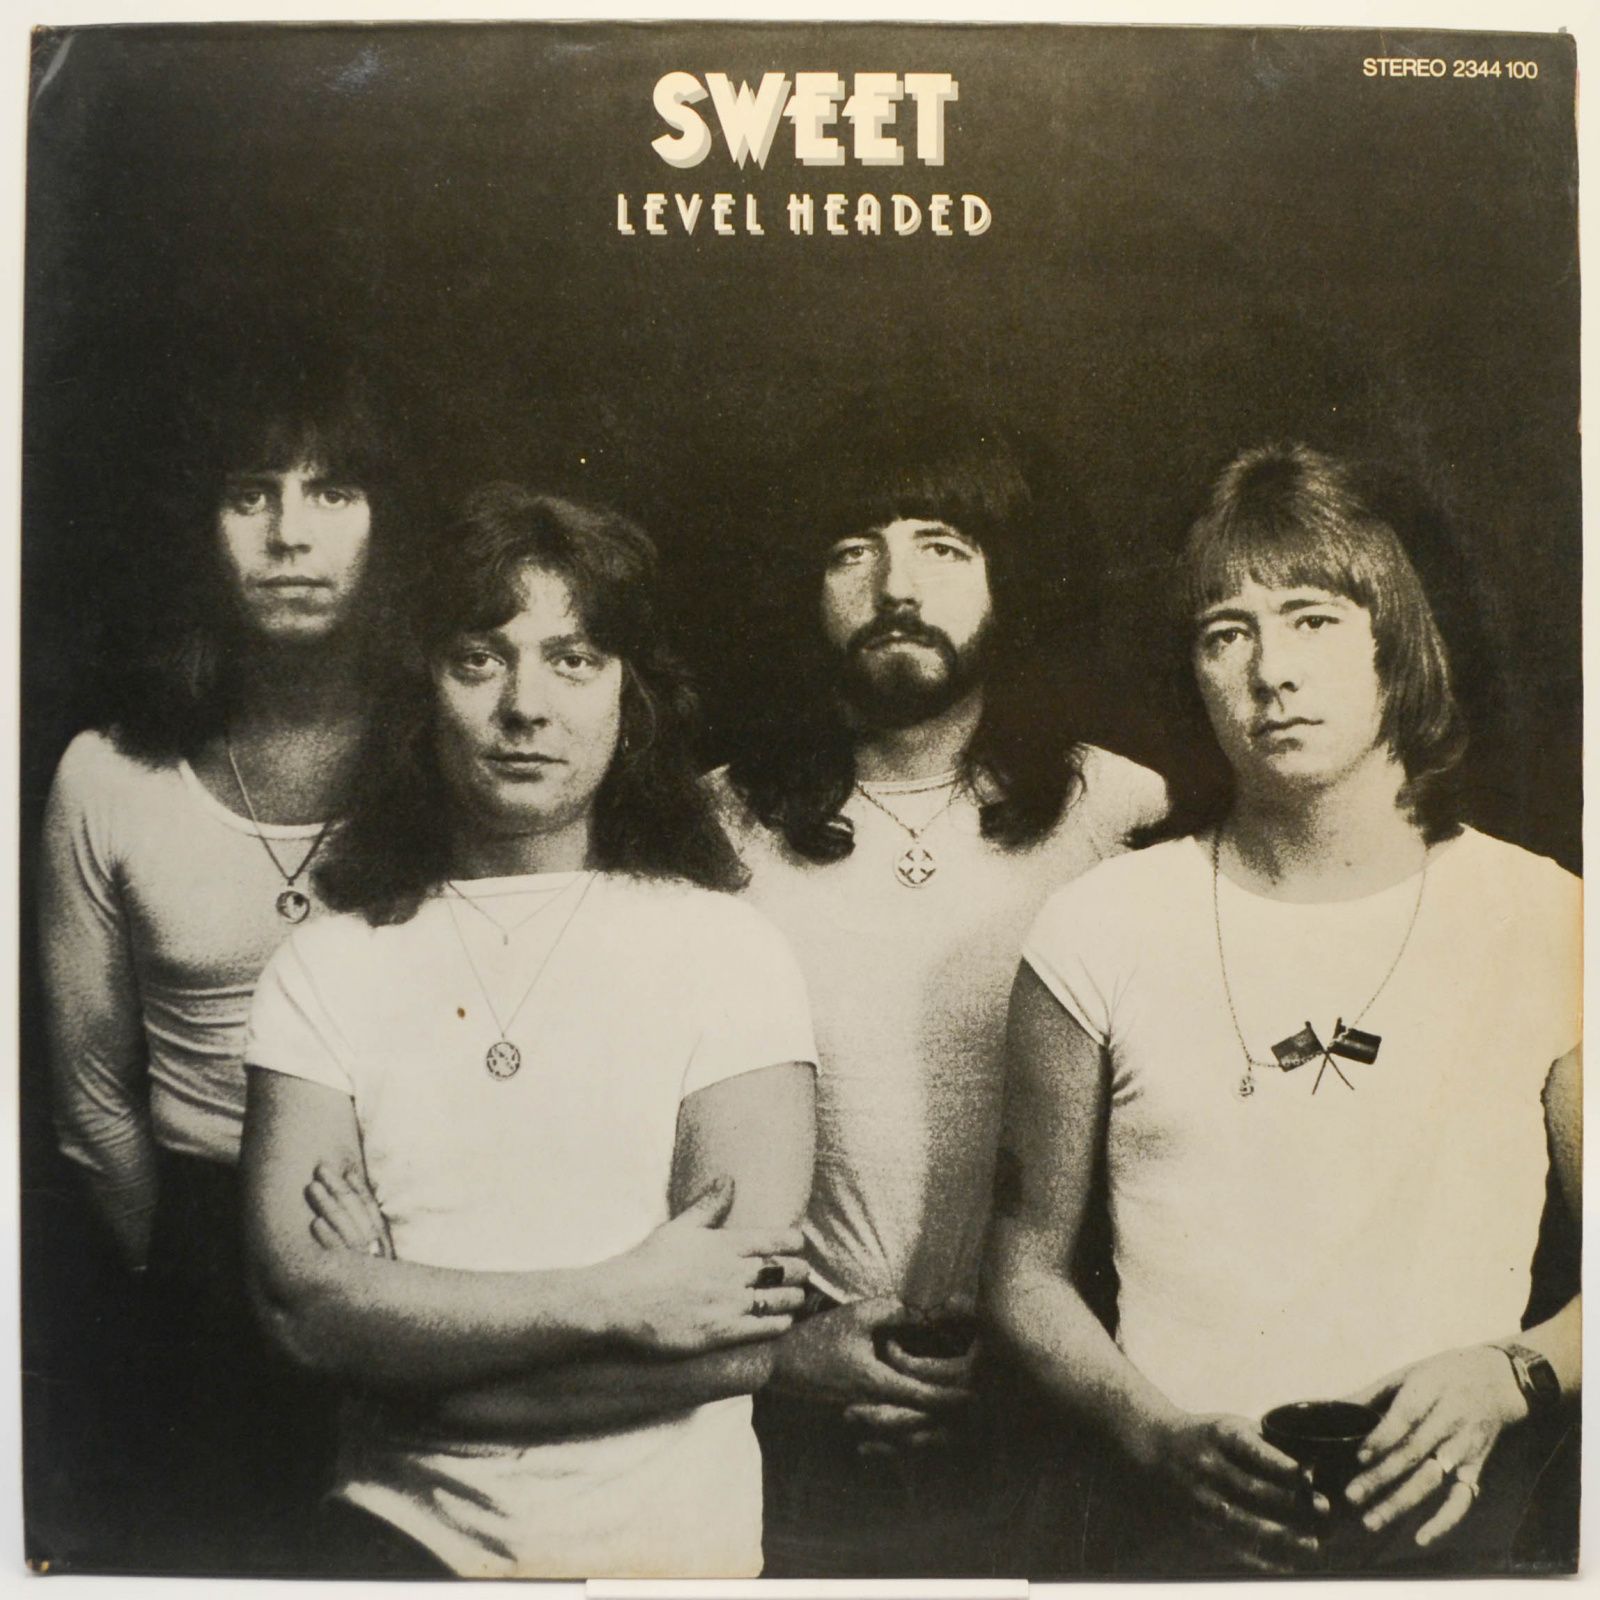 Sweet — Level Headed, 1978